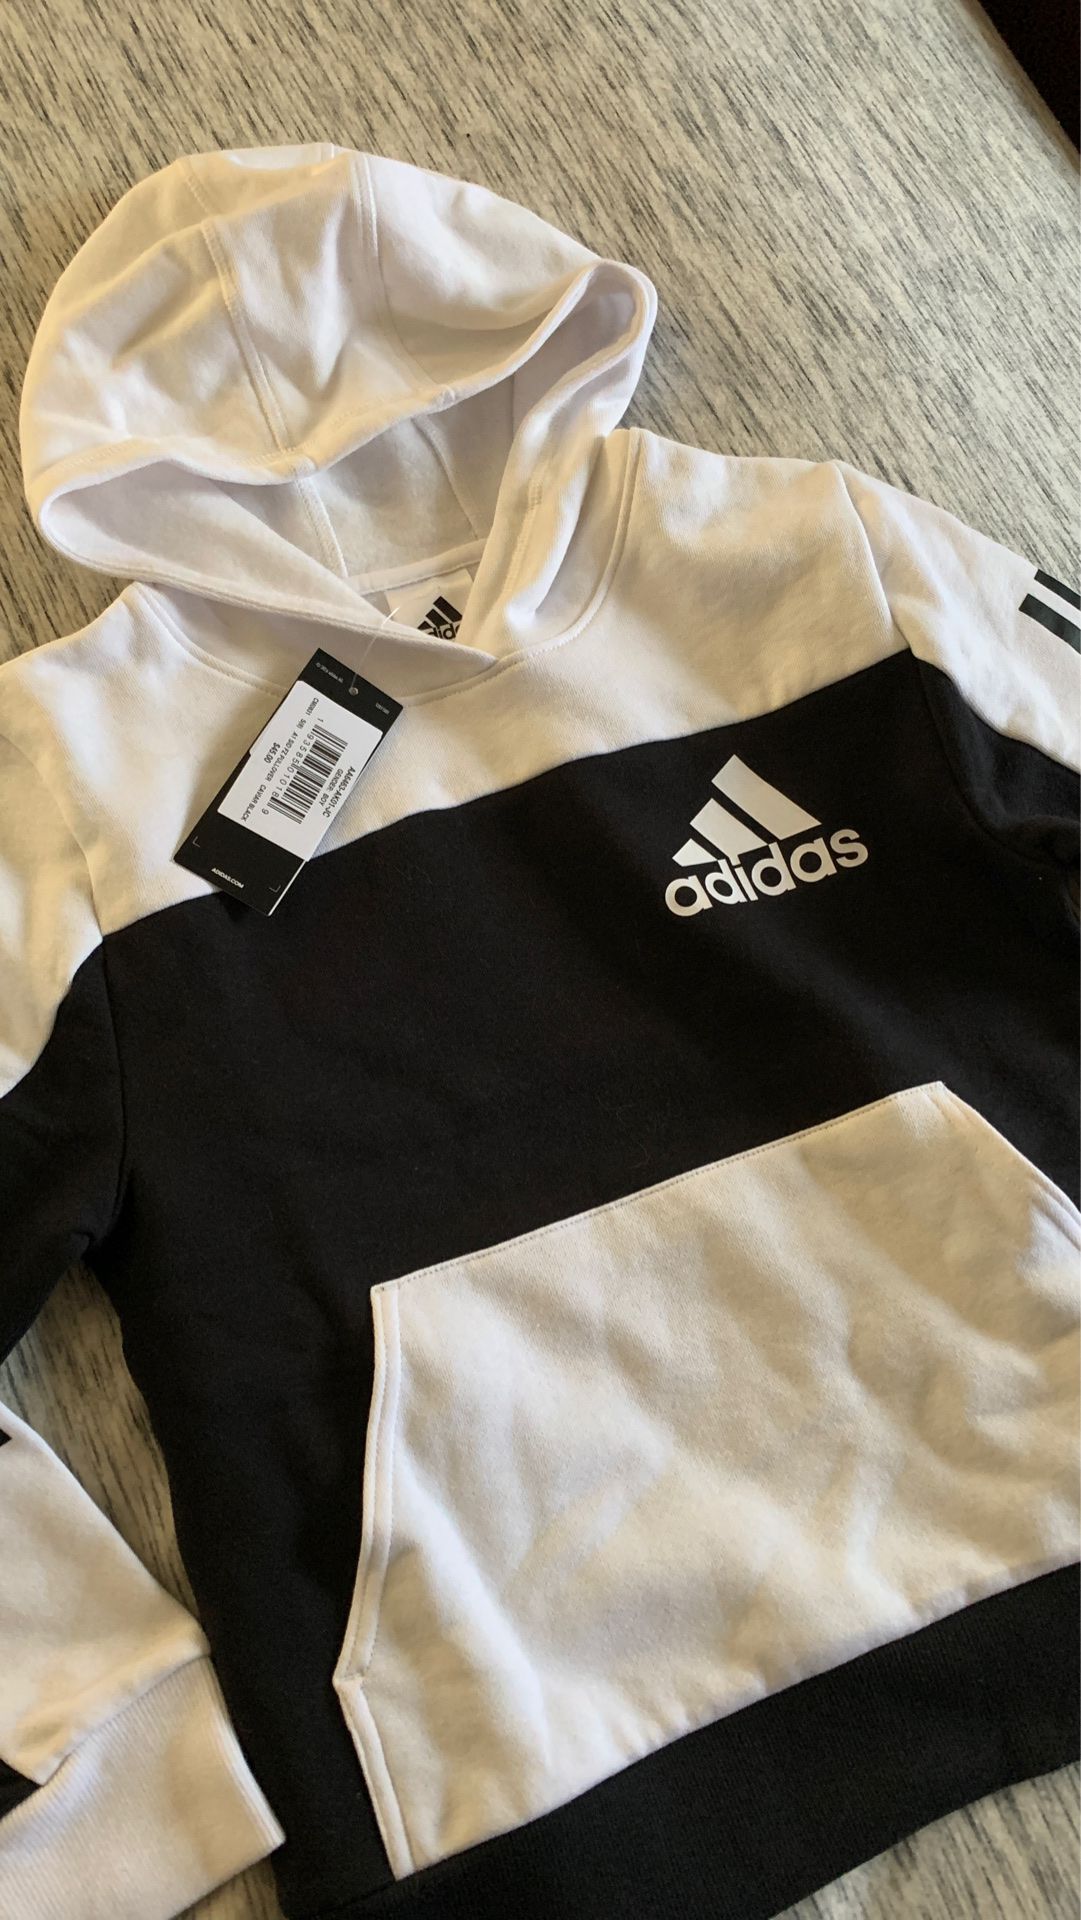 Adidas Black and White Sweatshirt Hoodie Size 8 Boys